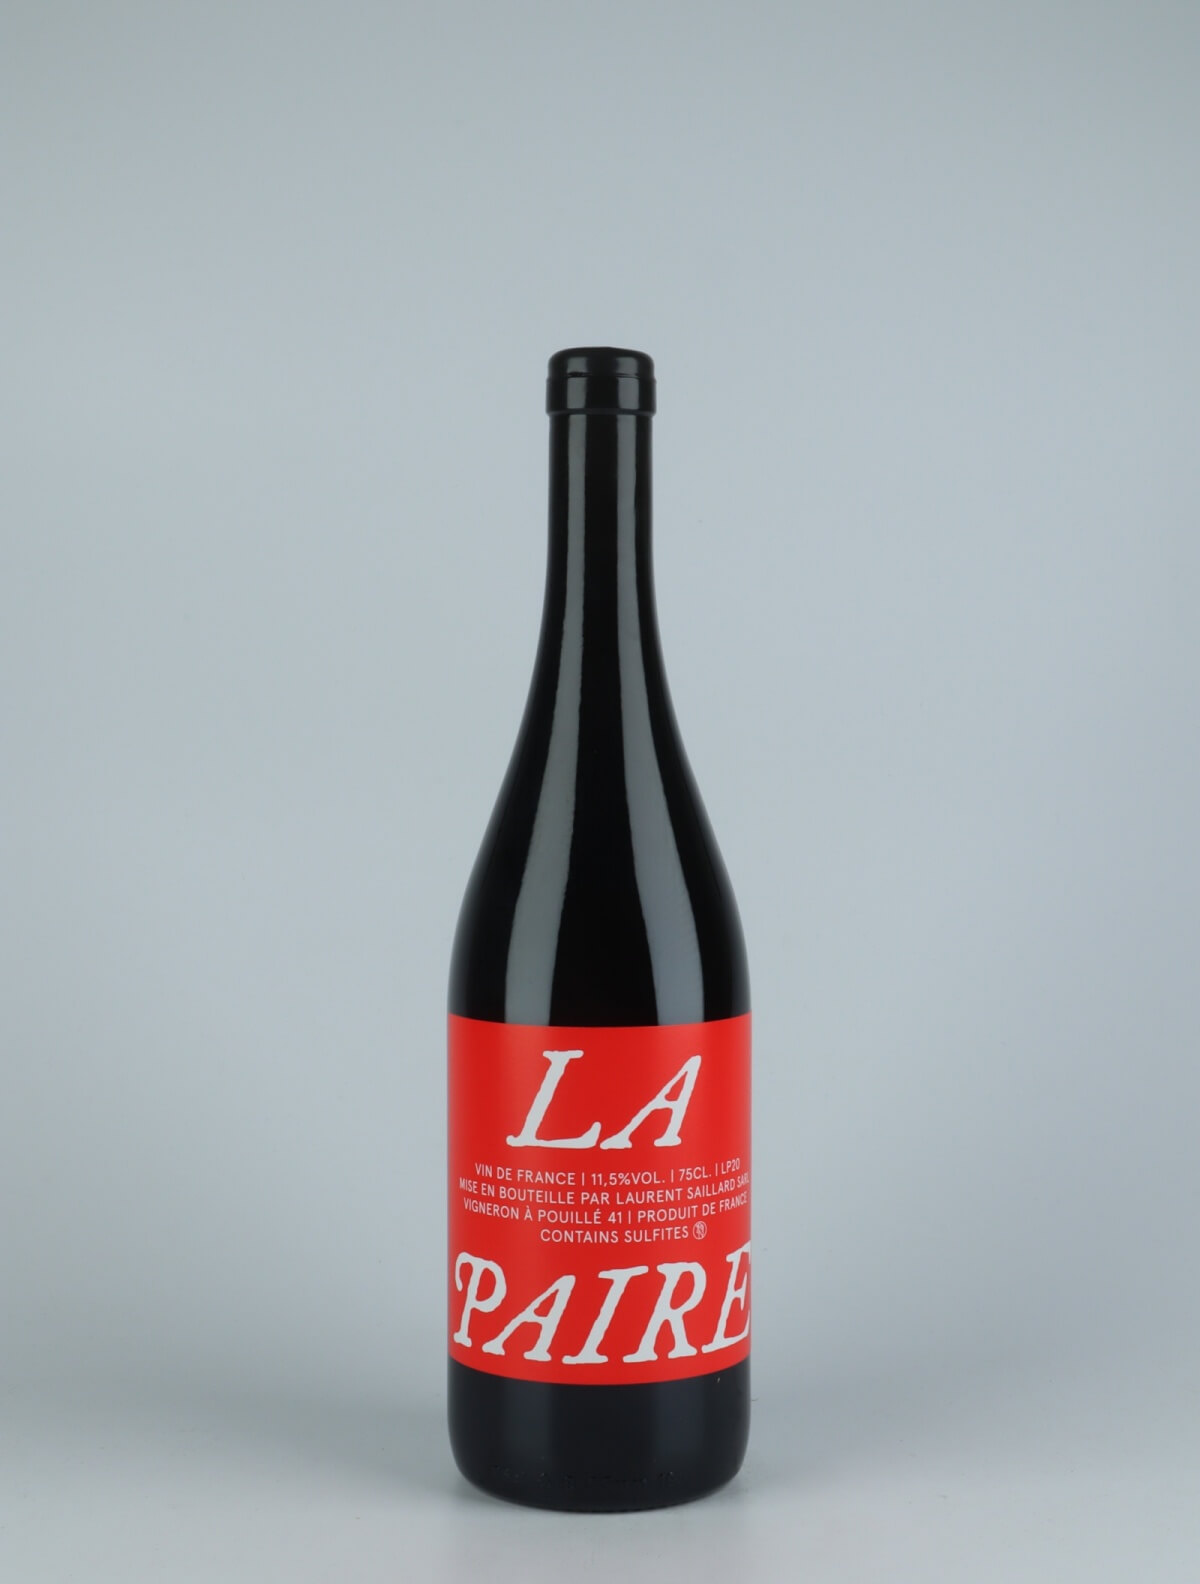 A bottle 2020 La Paire Red wine from Laurent Saillard, Loire in France